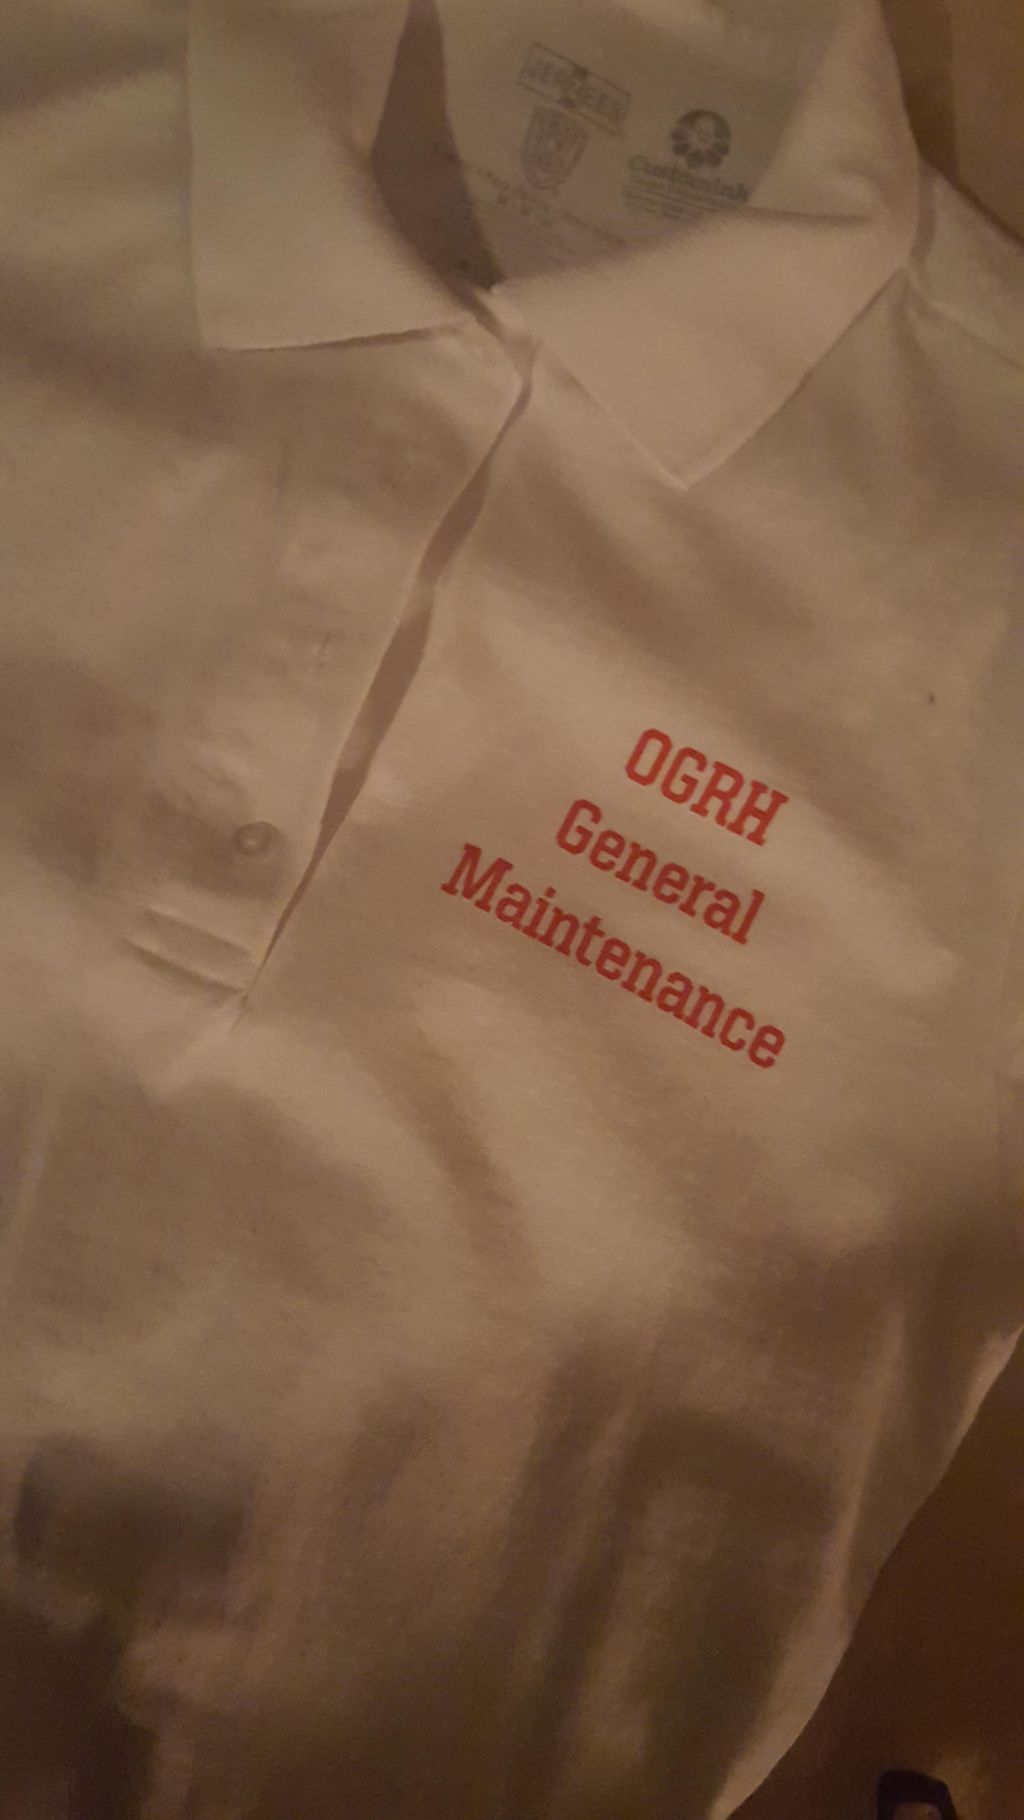 OGRH General  Maintenance, LLC